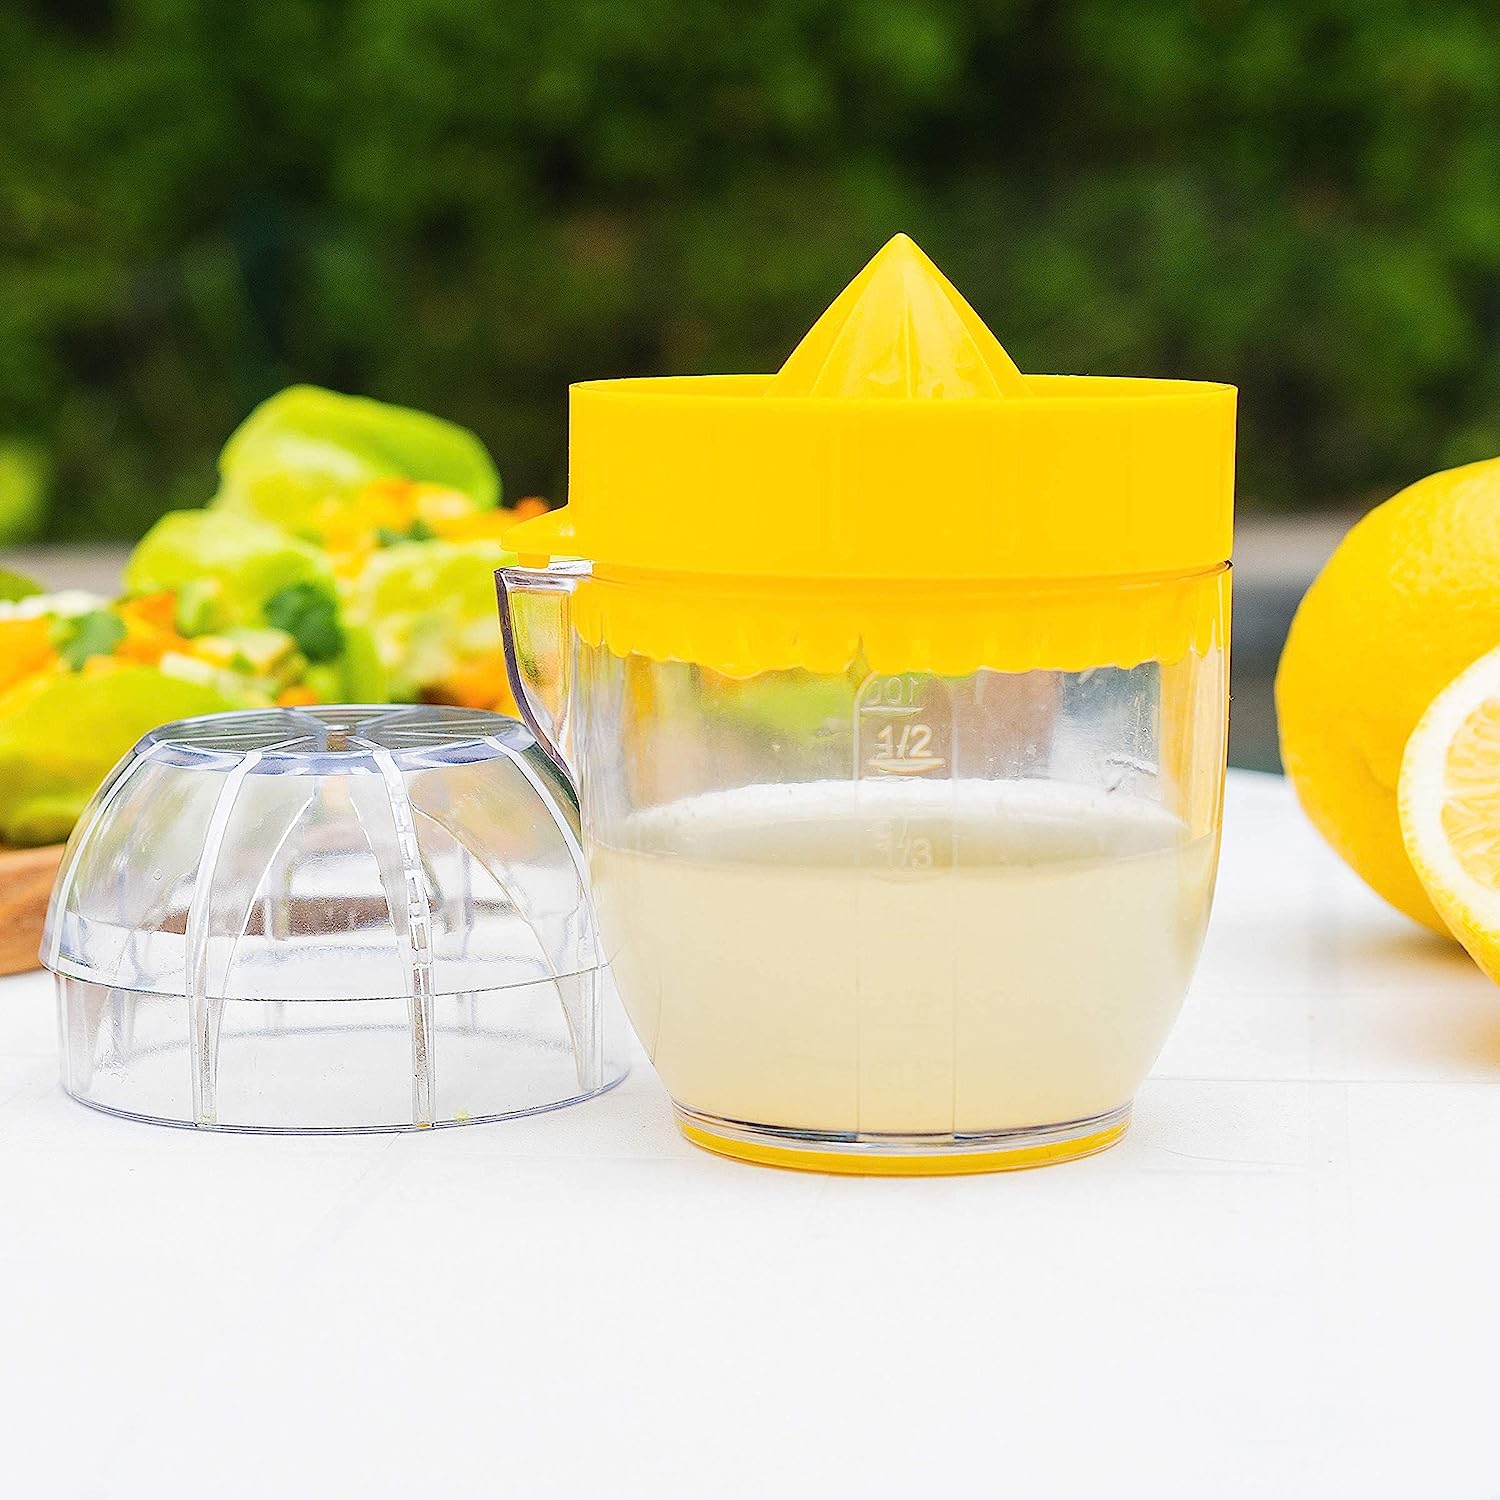 Lemon Juicer | Encouraging Greens